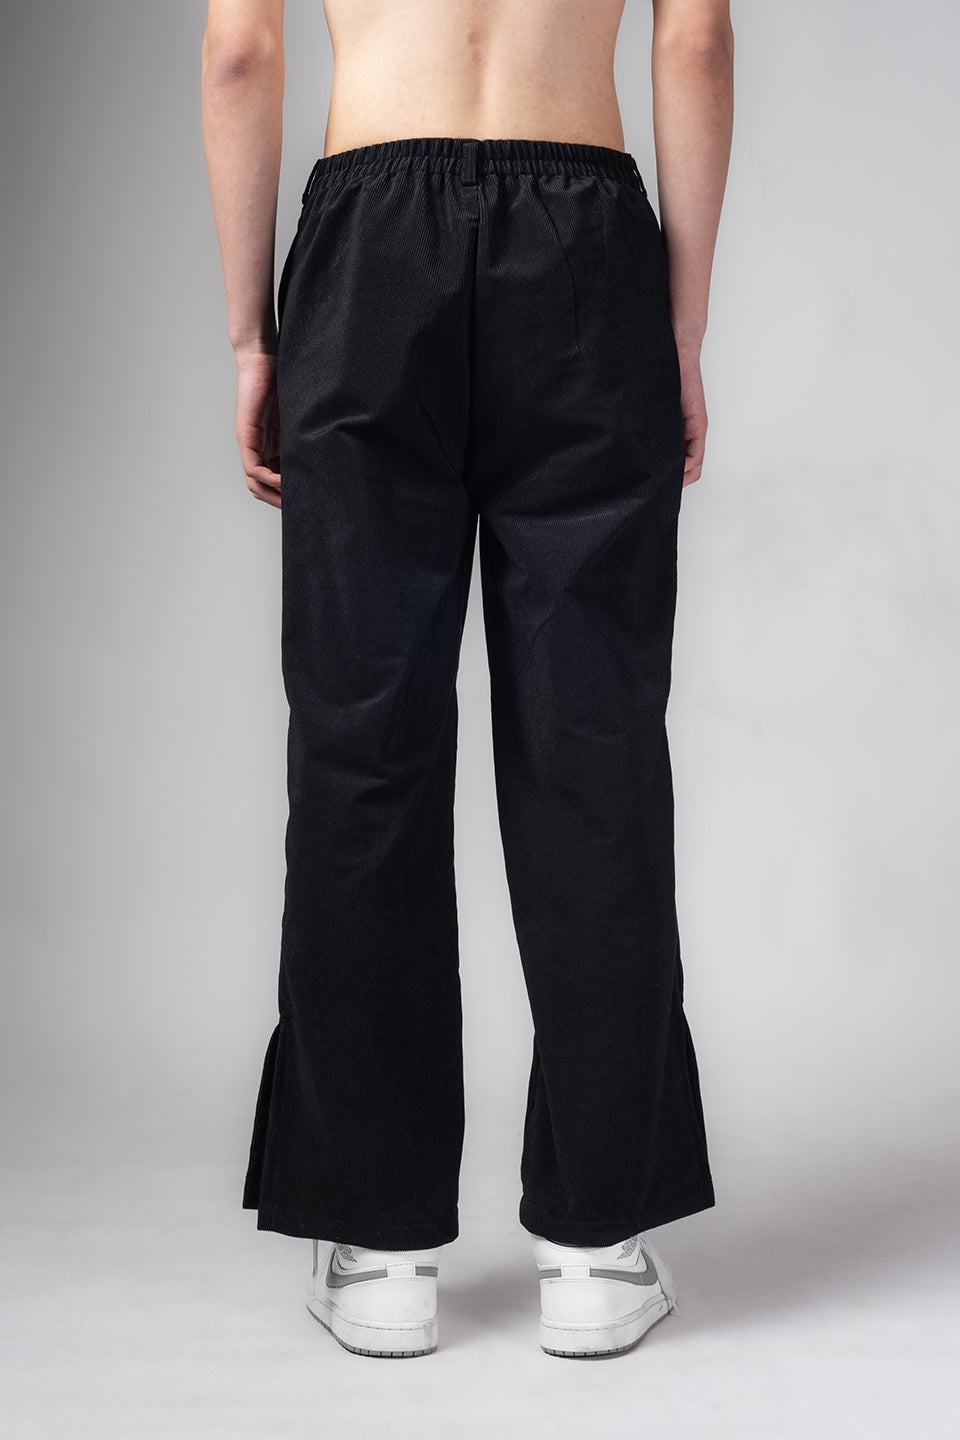 Exypnos Licorice Black Corduroy Pants – Paradeigma Store